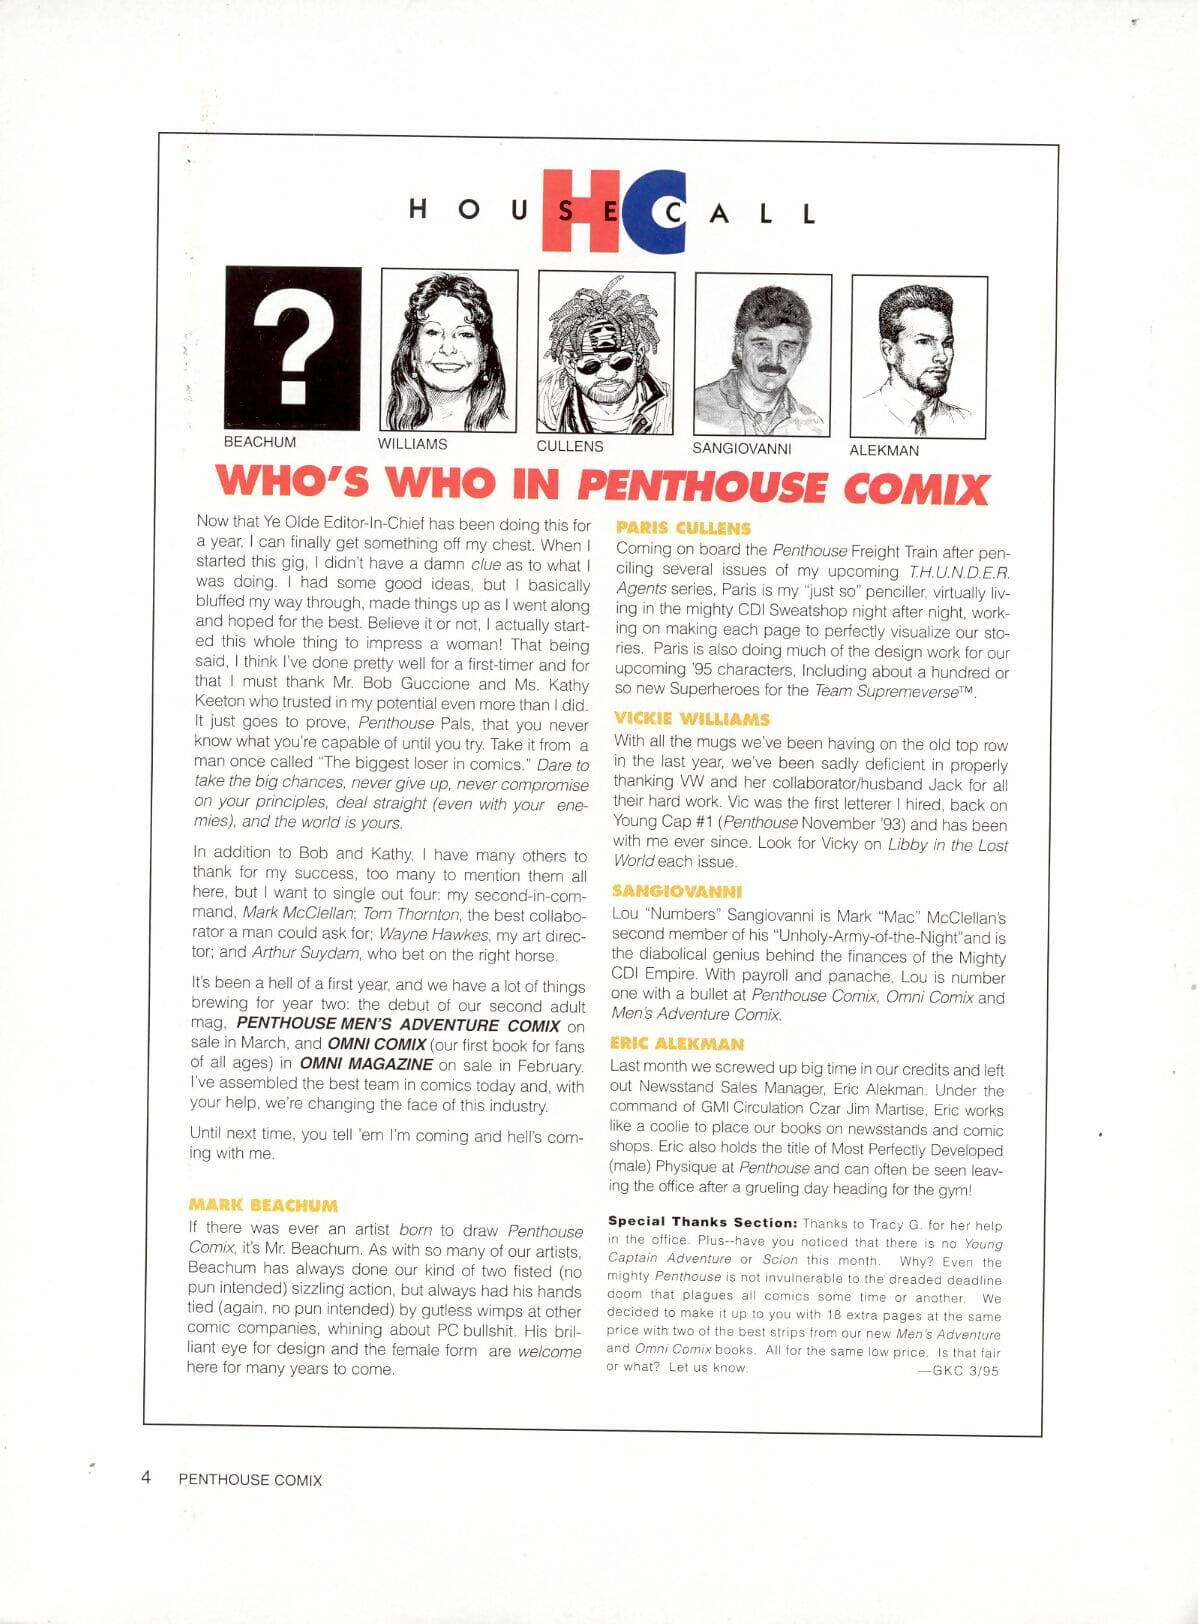 Penthouse Mens Adventure Comix page 1